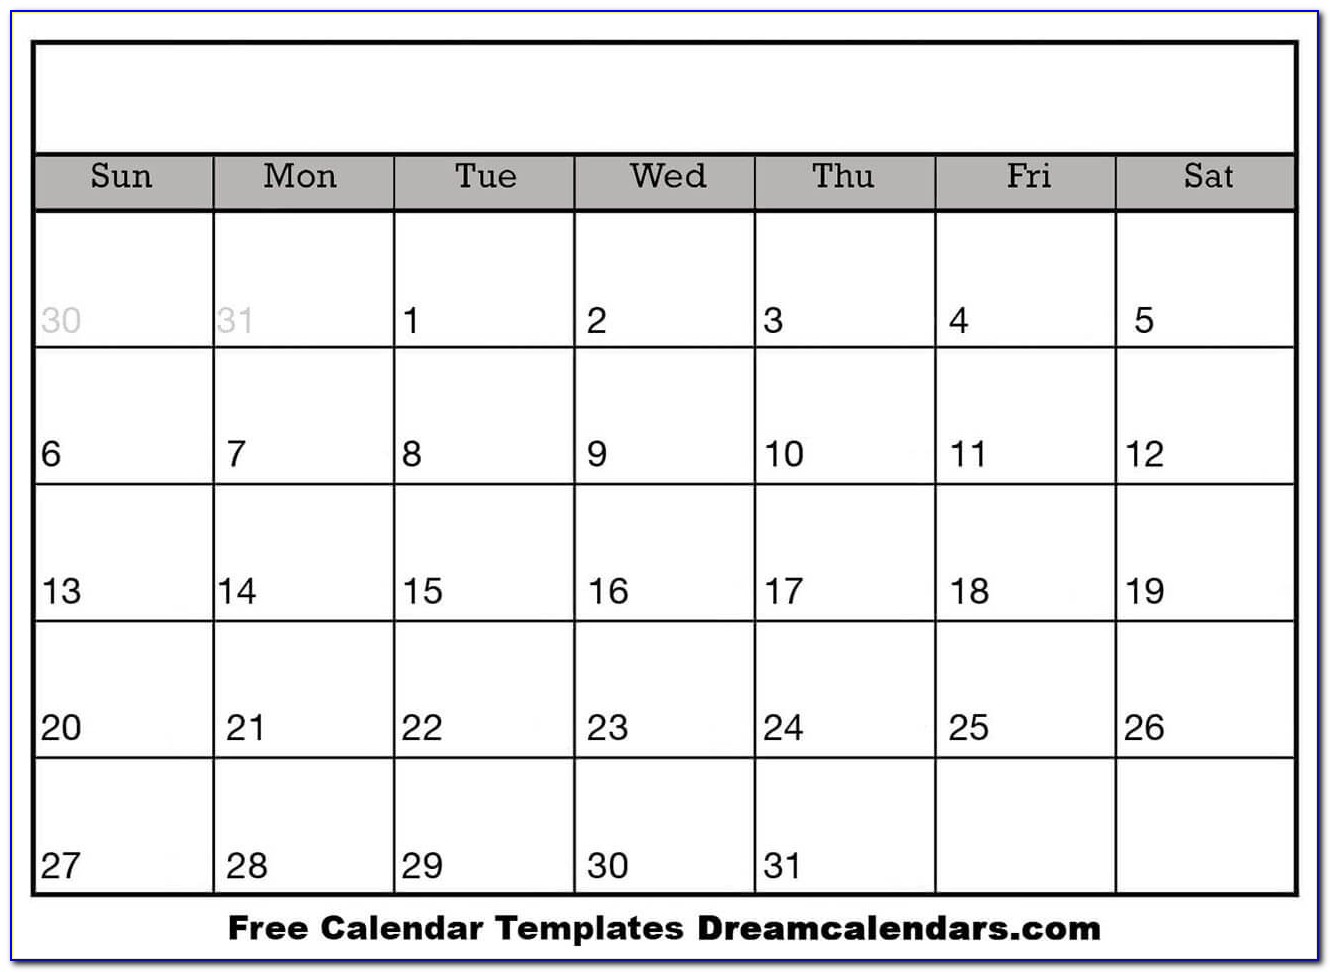 Free Customized Calendar Templates